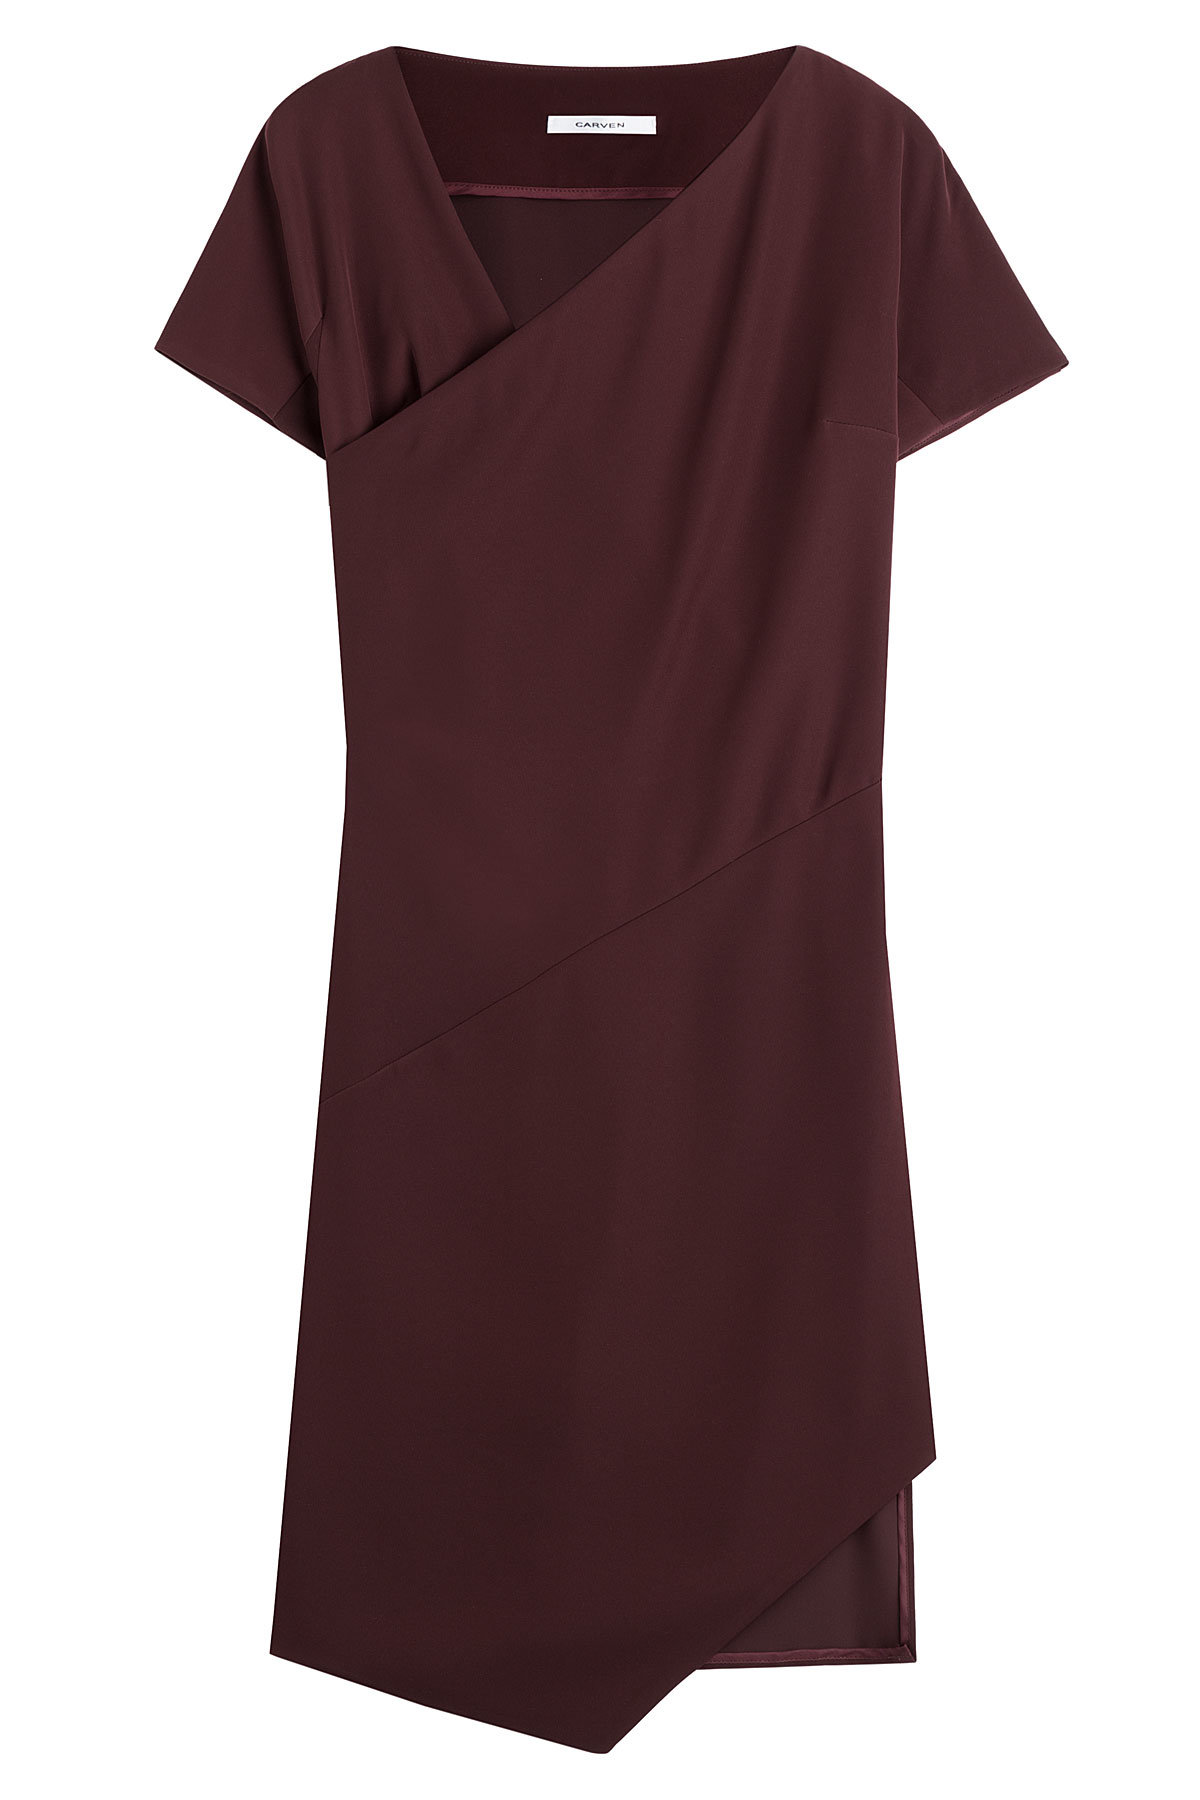 Carven - Dress with Asymmetric Hem